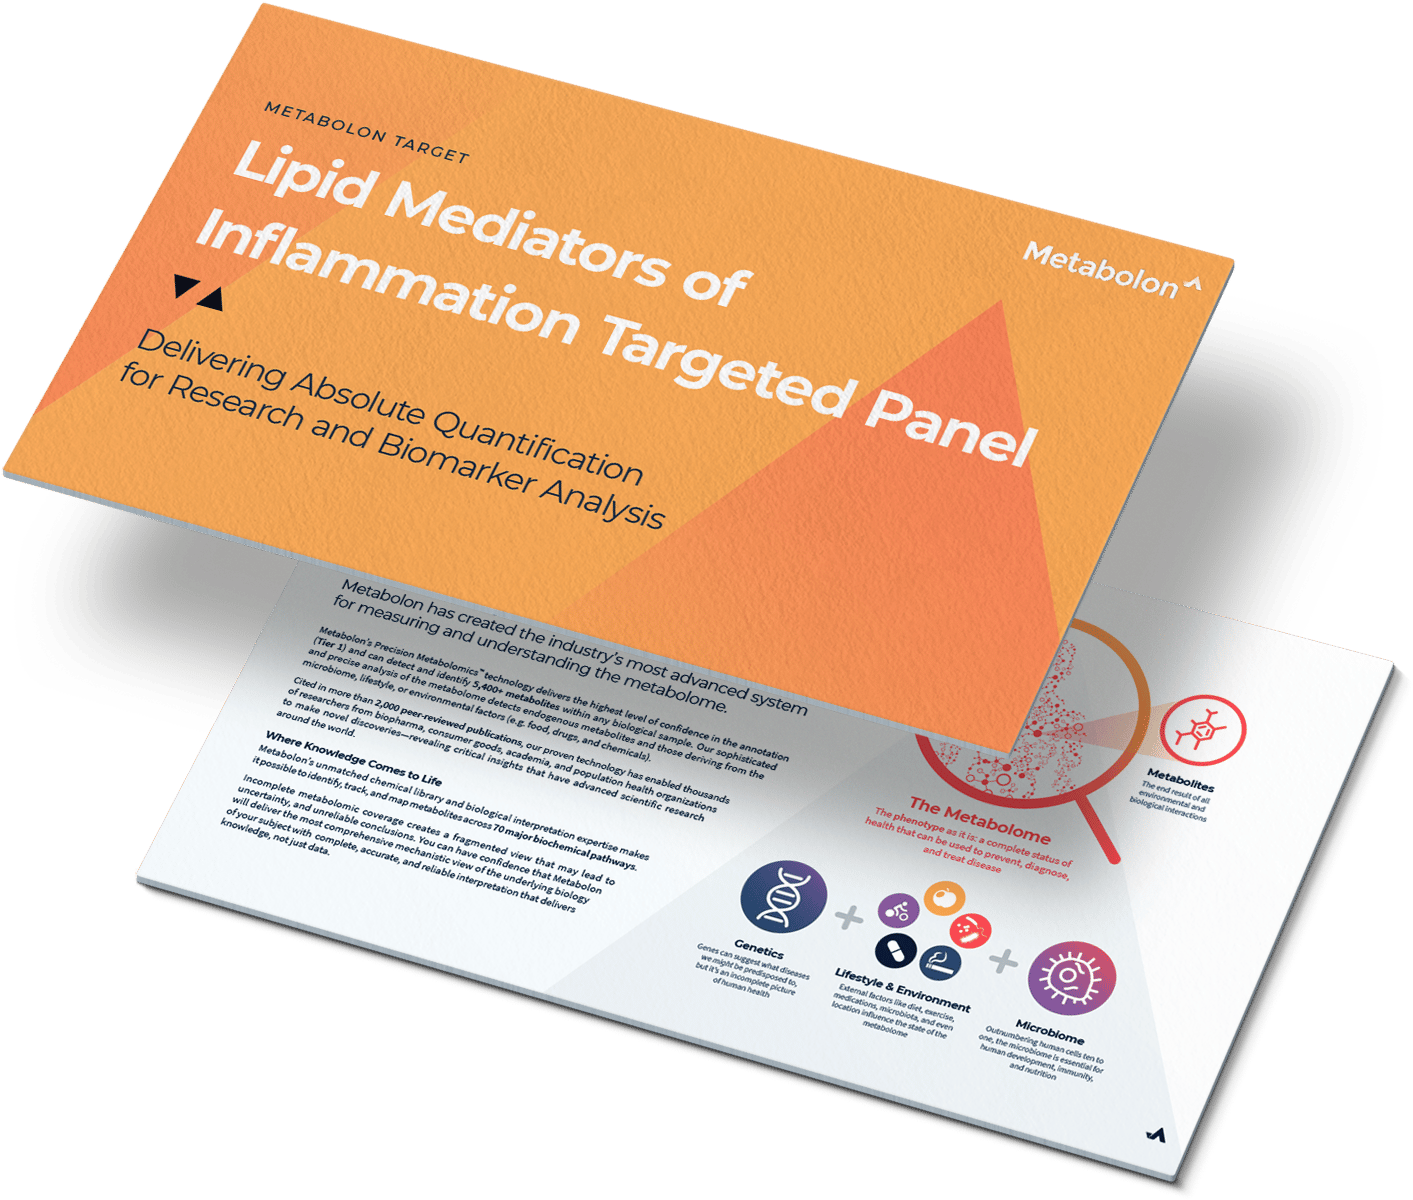 Lipid Mediators of Inflammation Targeted Panel